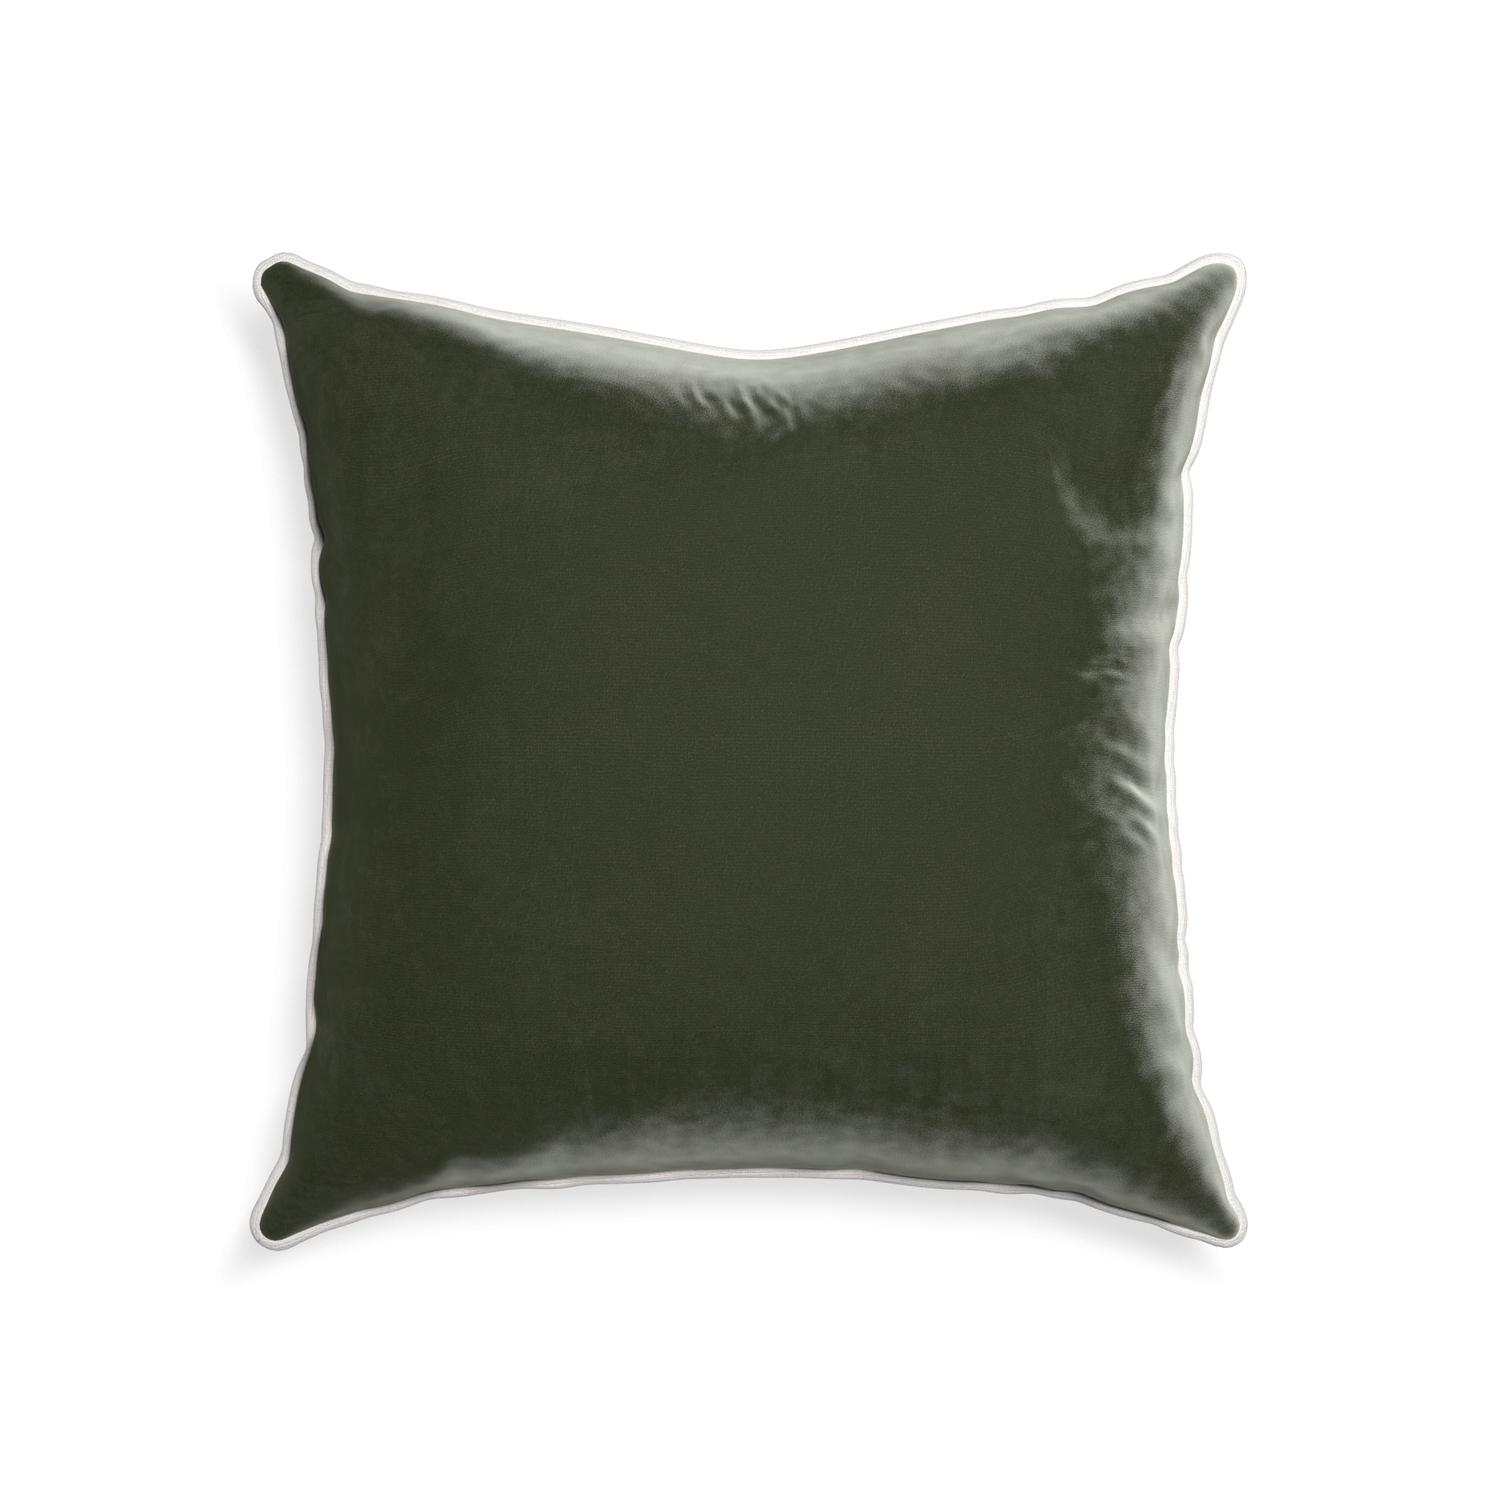 square fern green velvet pillow with white piping